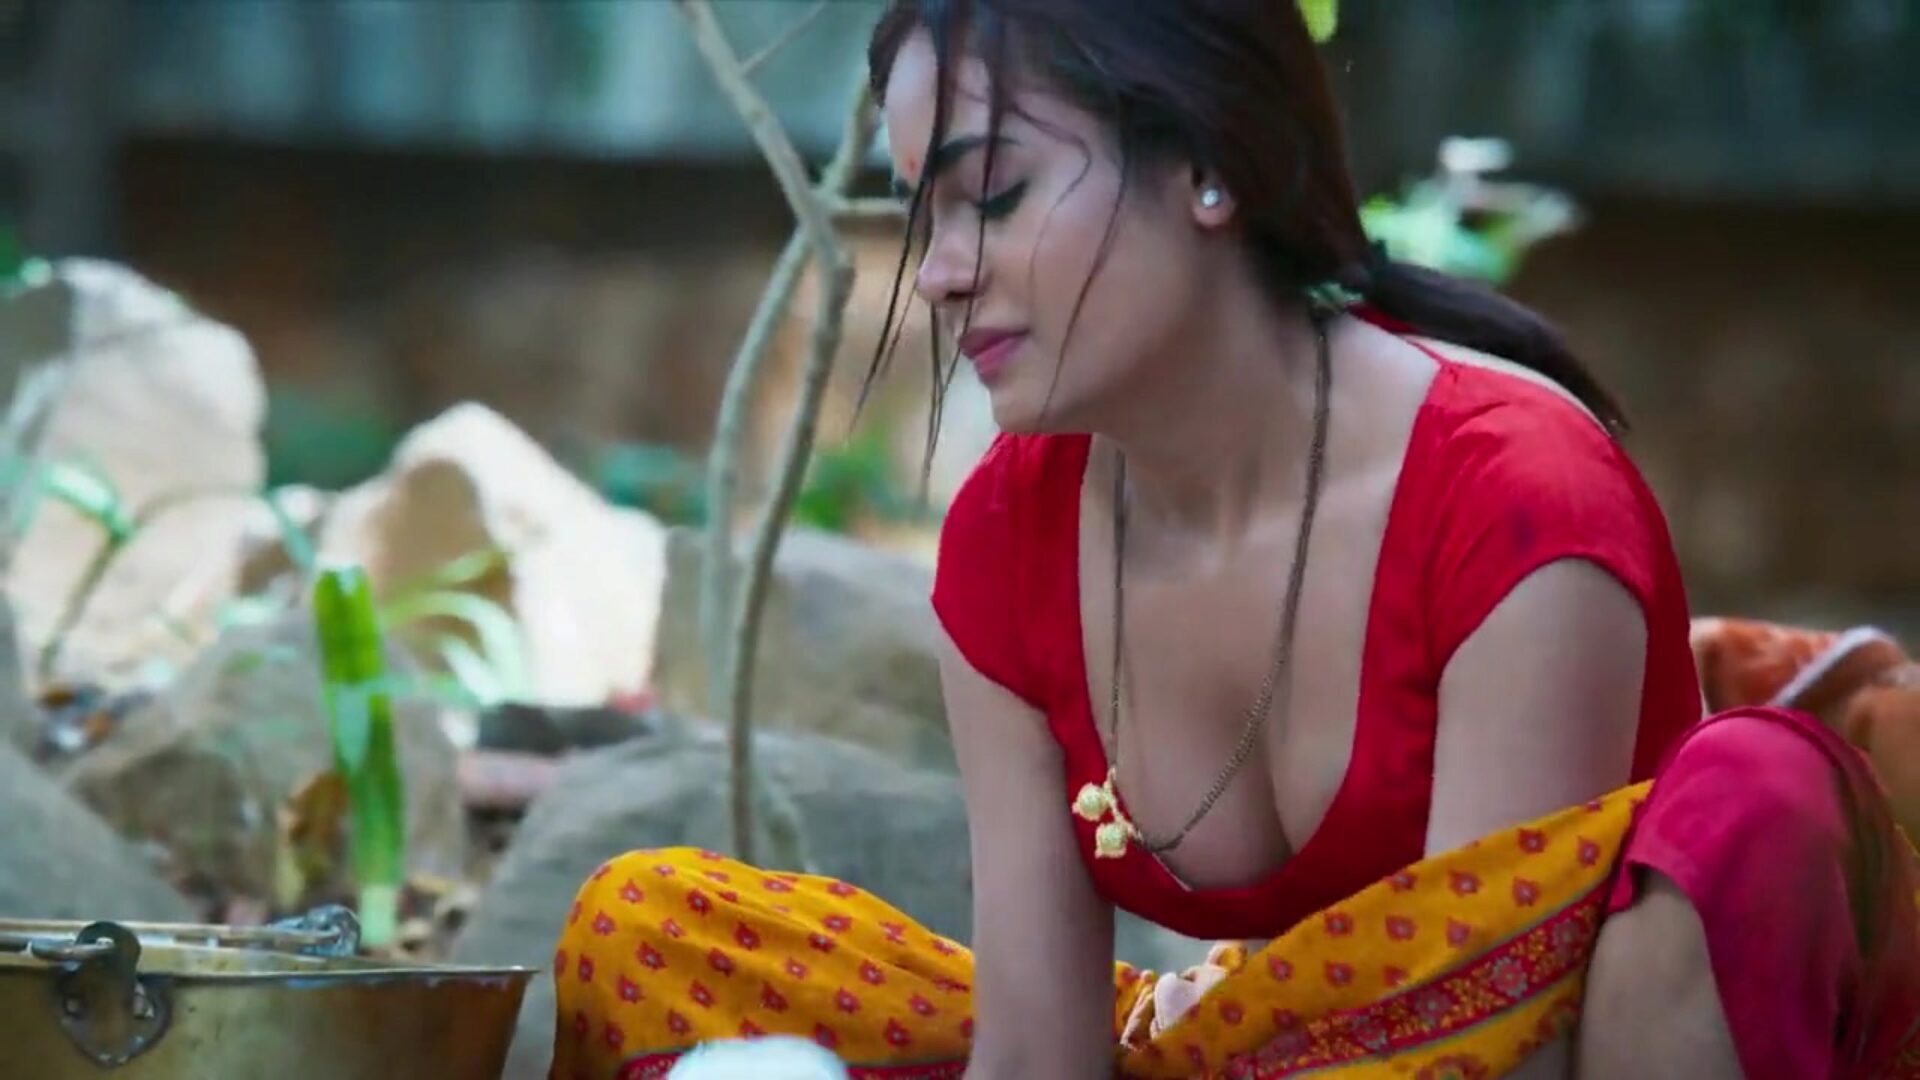 dhoban aur sarpanch ליהנות סיפוק נלהב מינית שחקנית הודית sikha sinha כמו sonu dhoban עושה פסיאנטית עם bang-out עם sarpanch. סיקה קרנן עם הבעל שלה. סיקה סינה דפק במצבי אורגיה שונים תחת גדול משרה